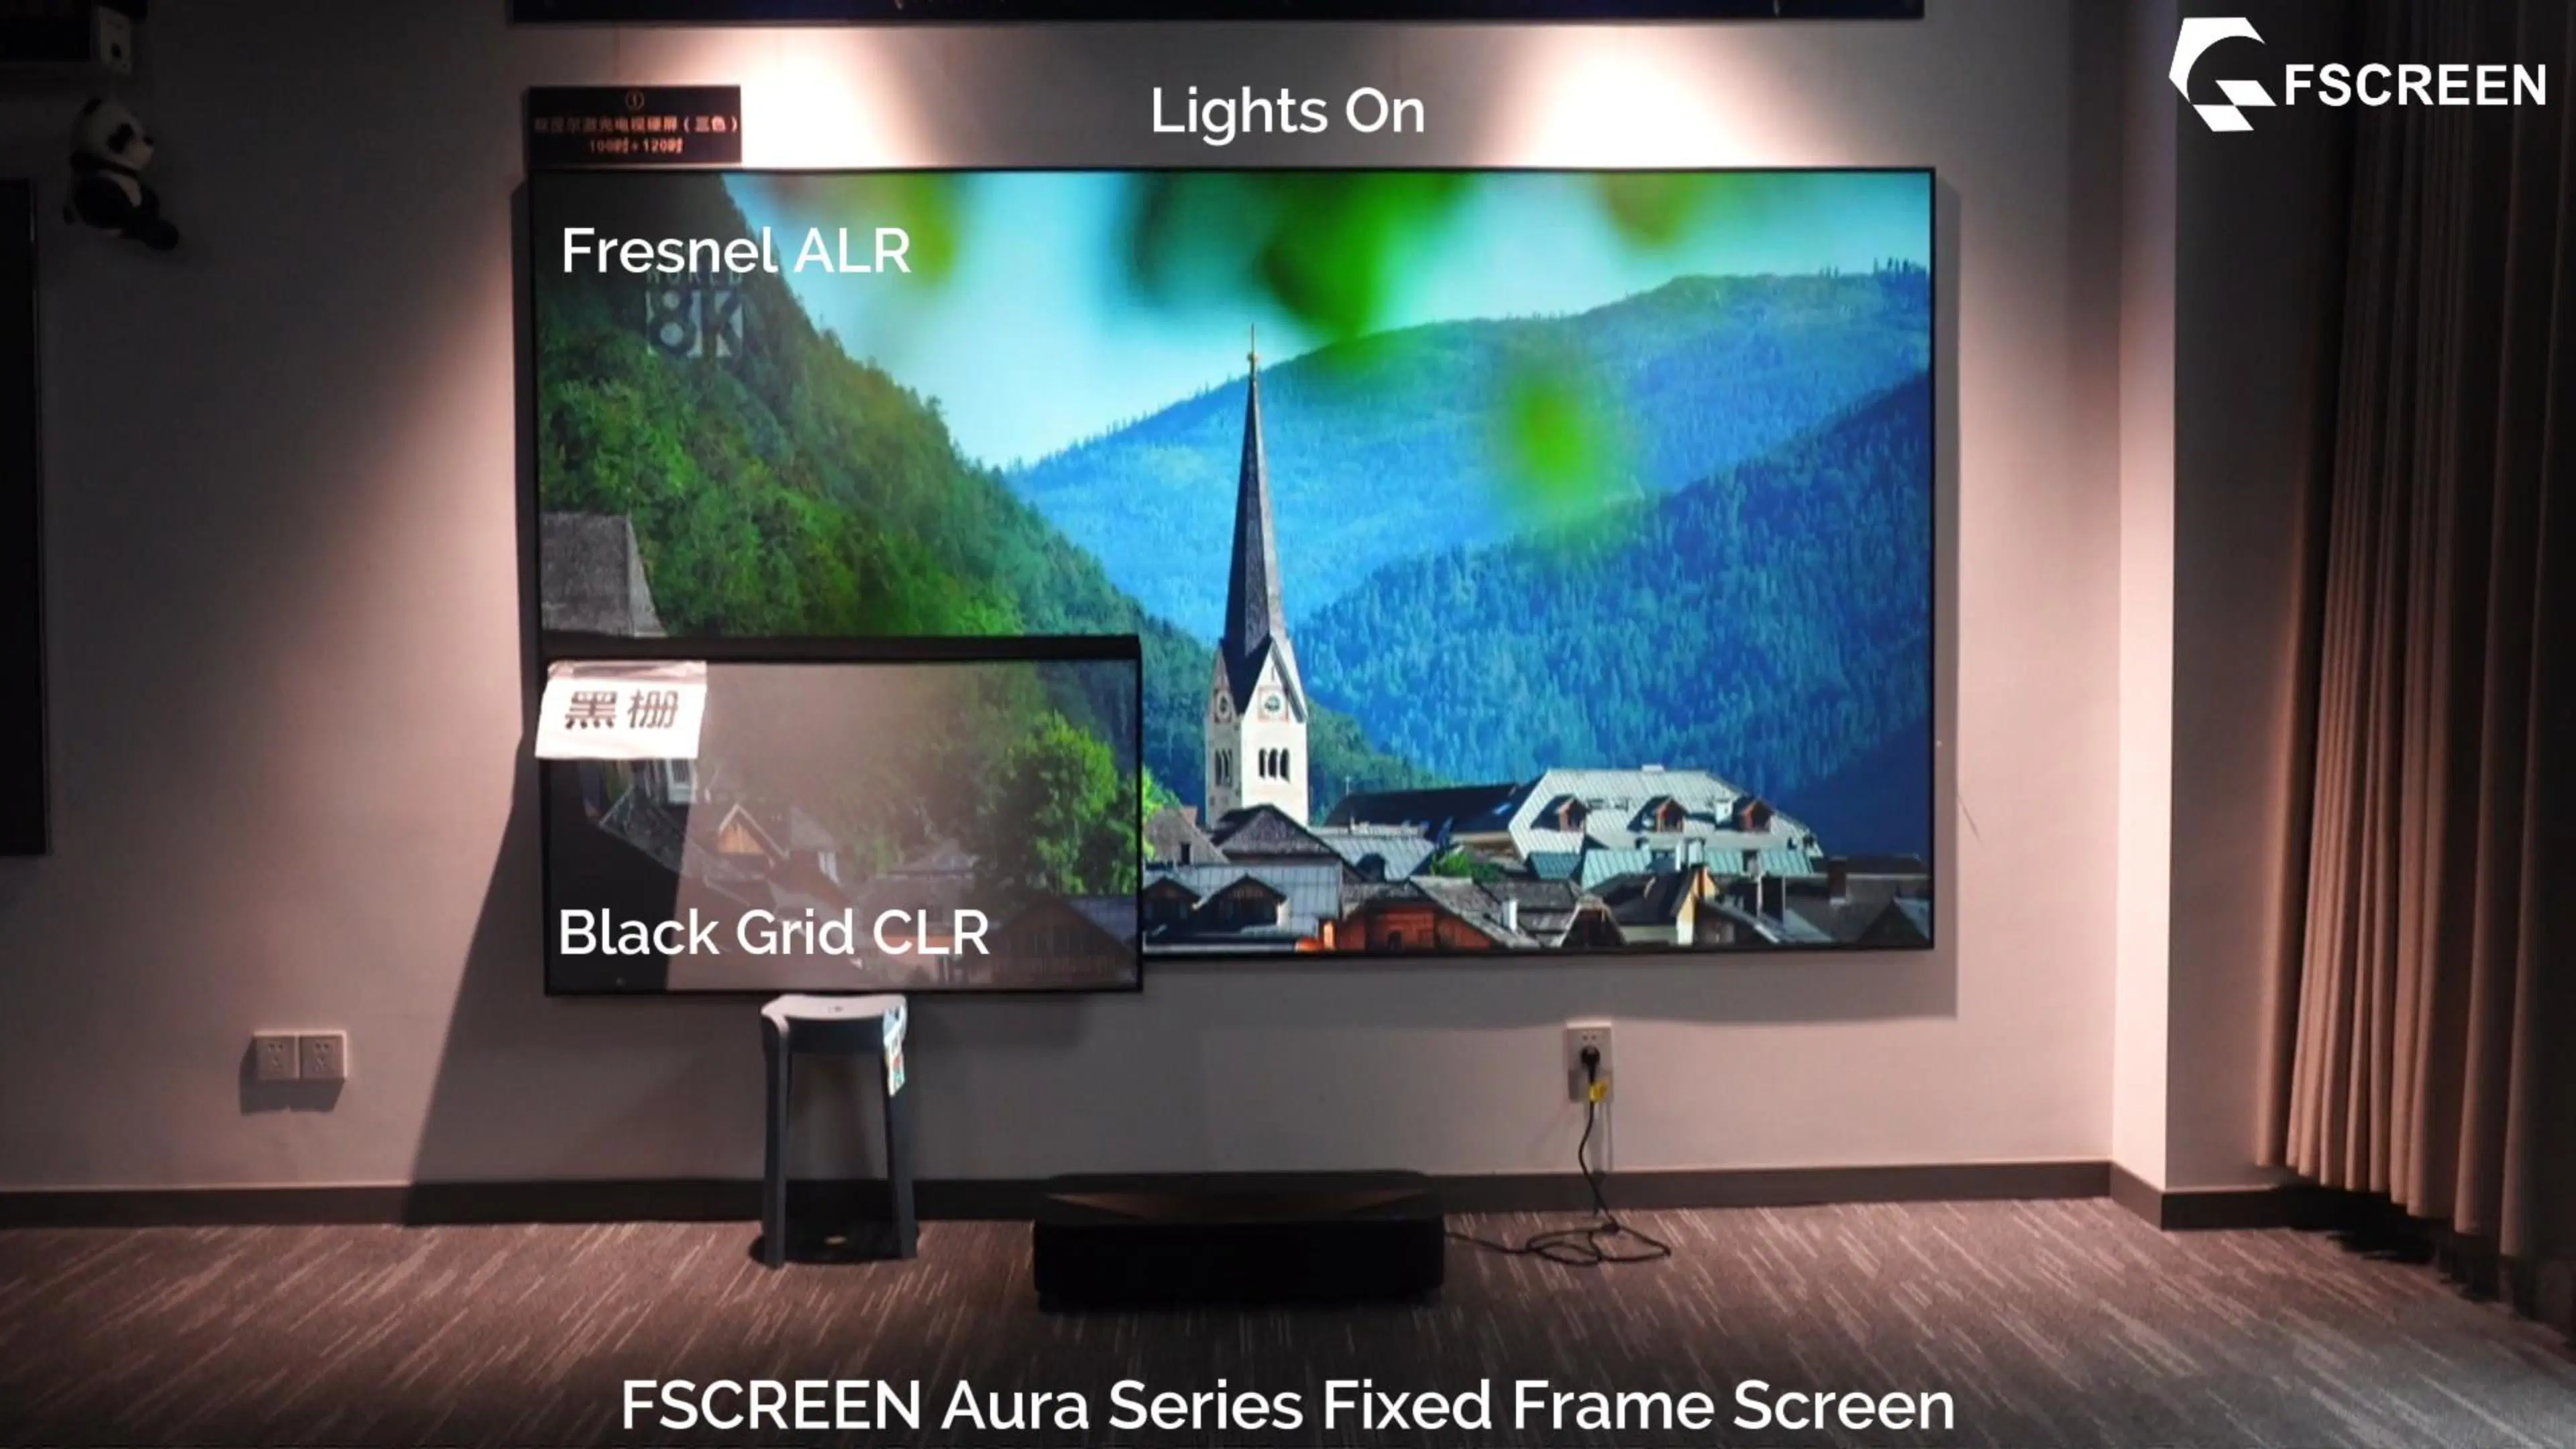 Fscreen Aura Series 120 Inch Alr Projection Screen for Ultra Short Throw Projector Laser Tvs